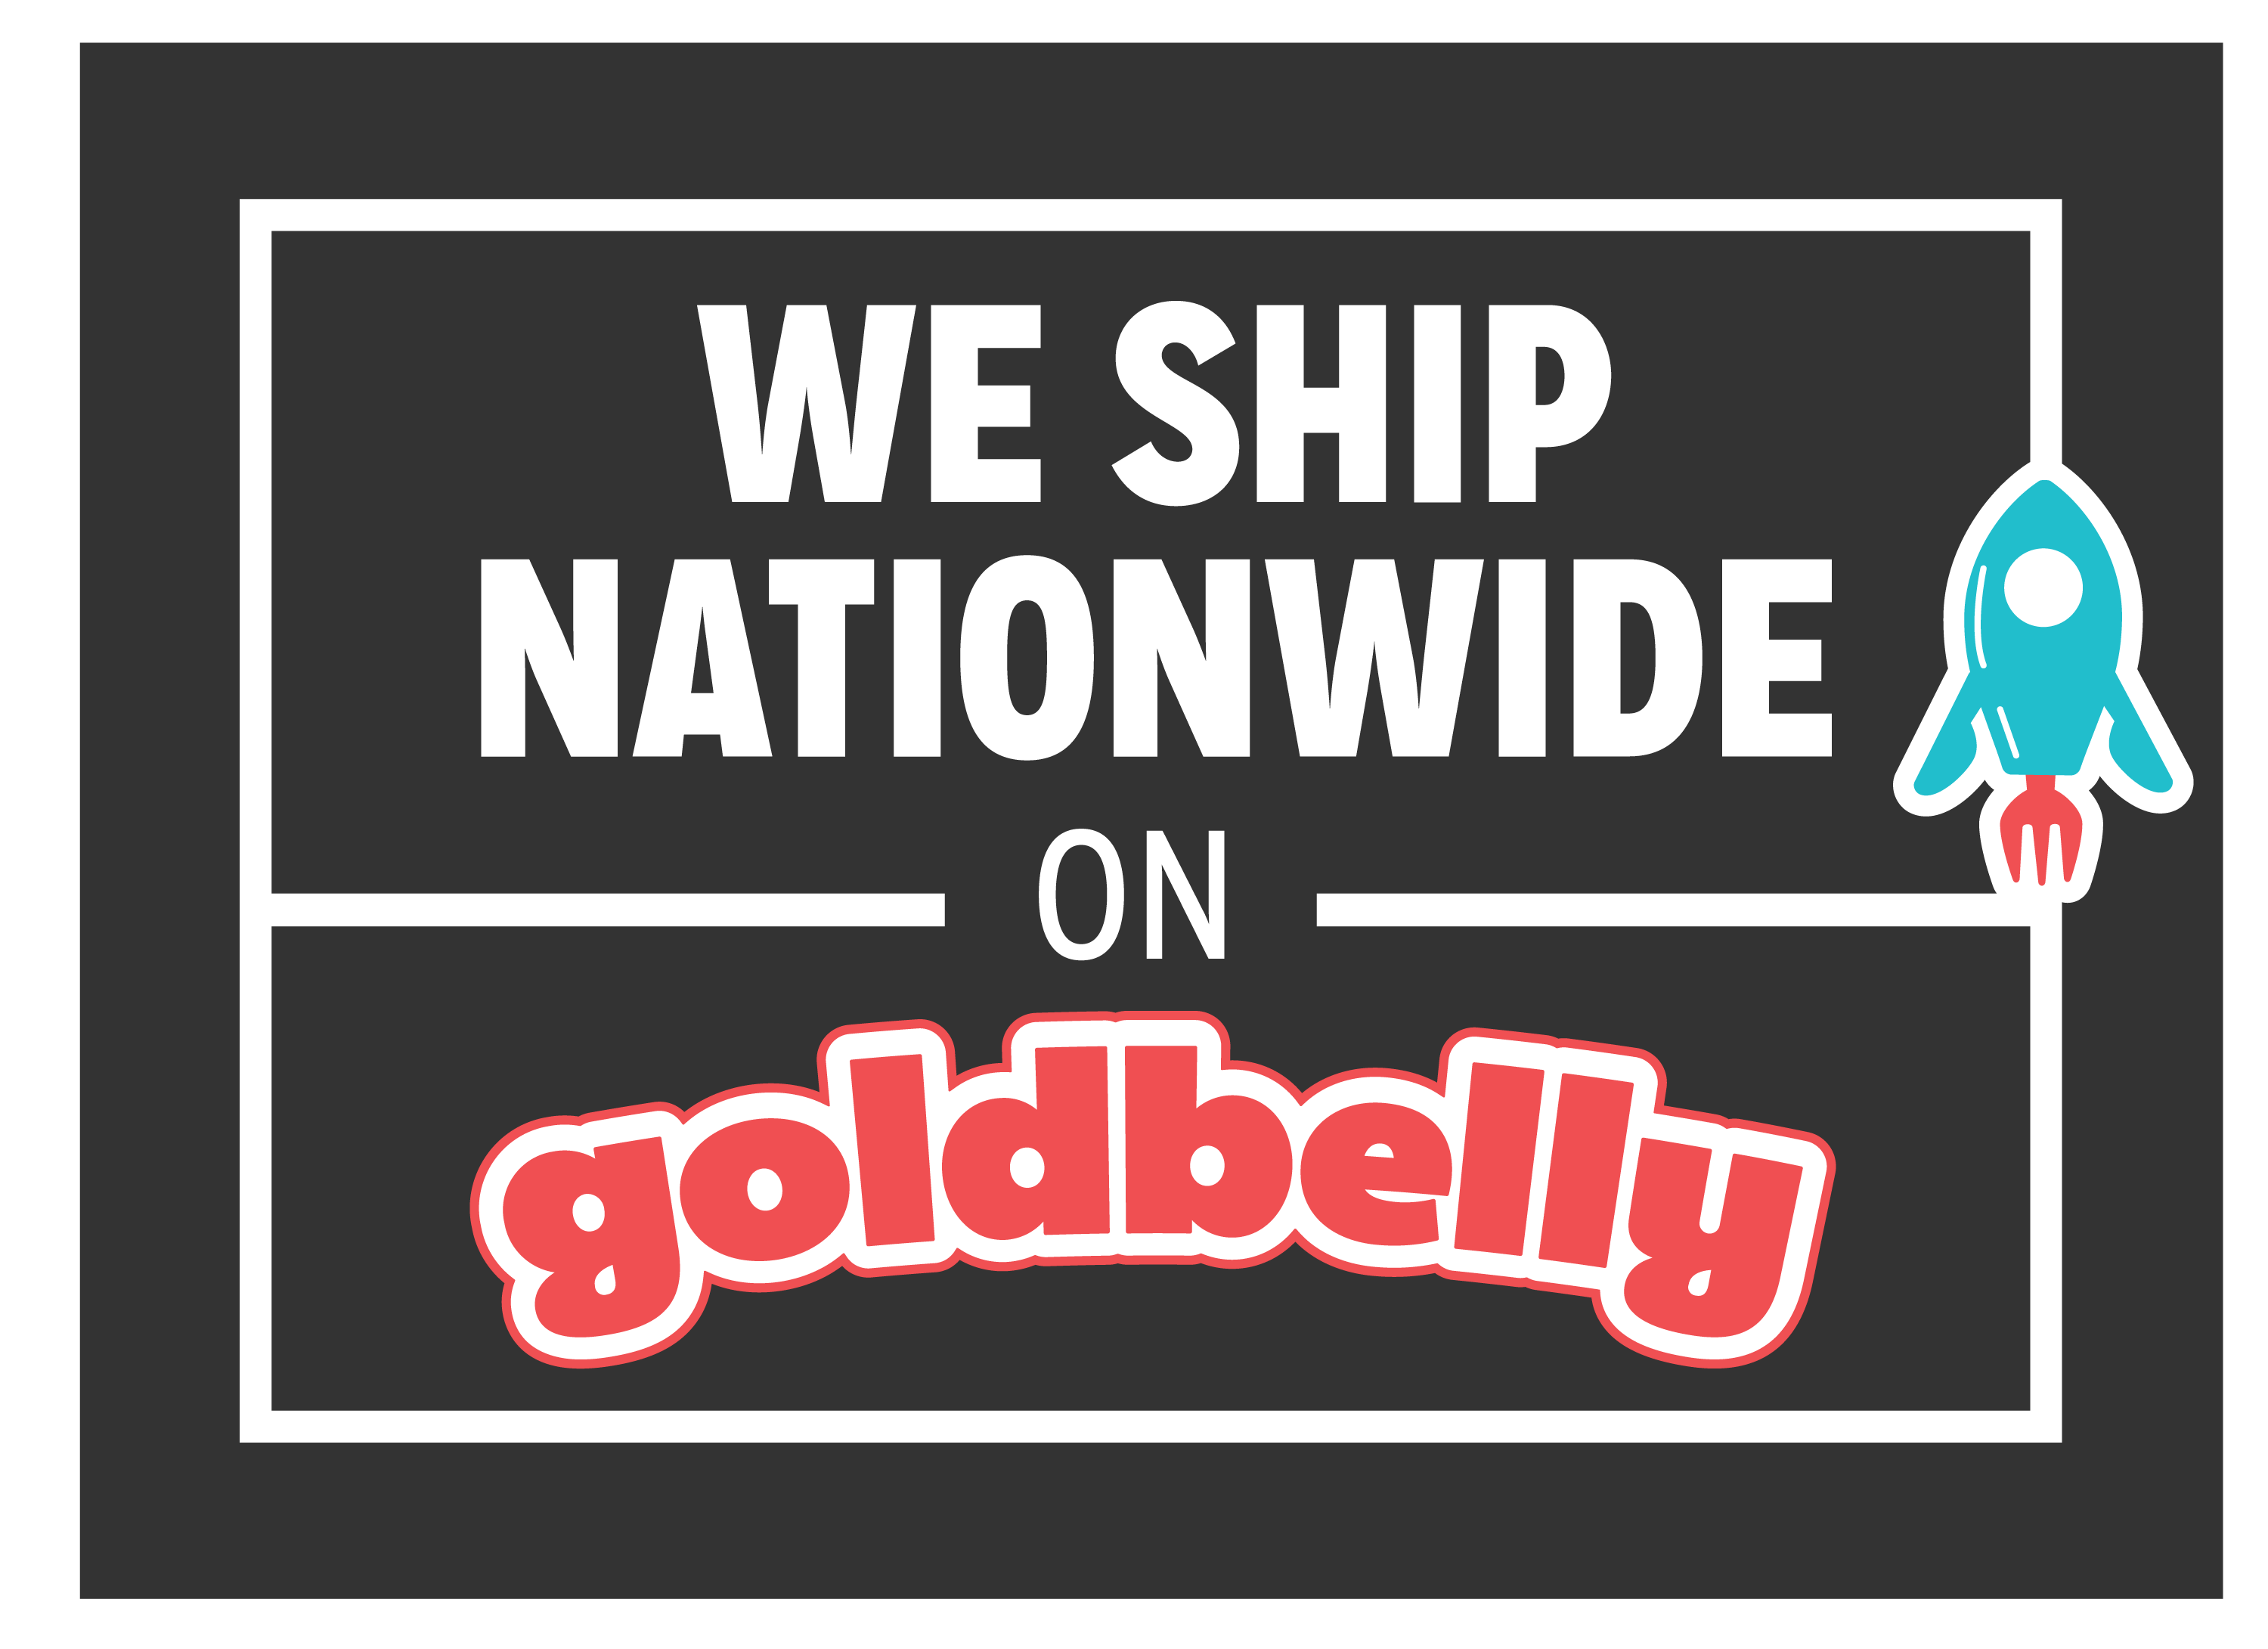 https://chelanfresh.com/wp-content/uploads/2020/02/Goldbelly-Nationwide-Shipping-Rectangle-Black-2019-V1.png